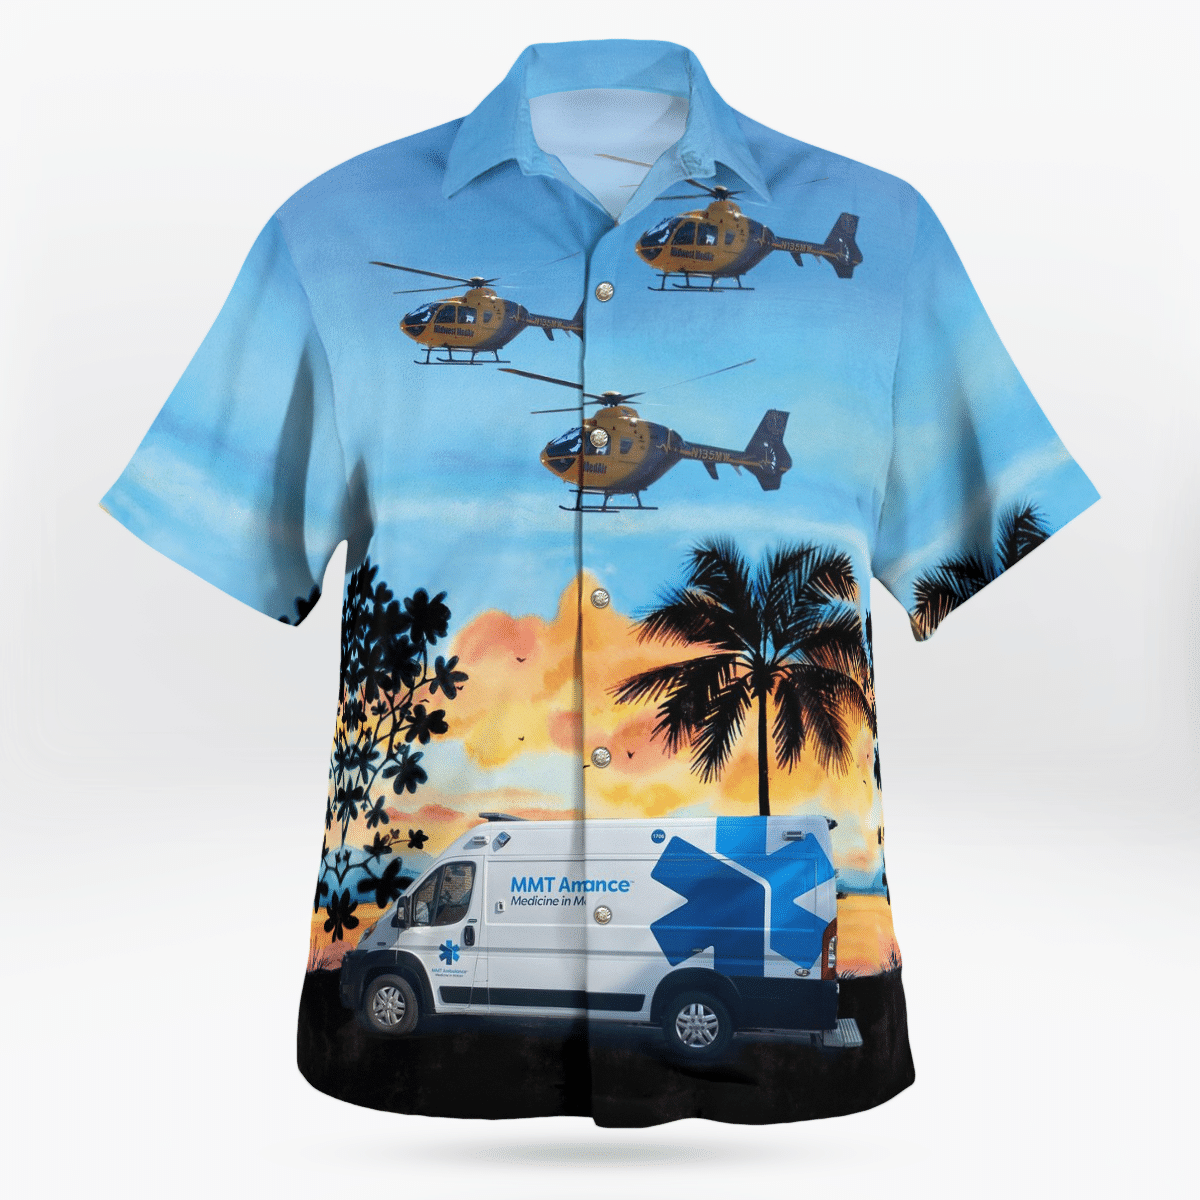 BEST Omaha, Nebraska, Midwest Medical-MMT Ambulance 3D Aloha Shirt2